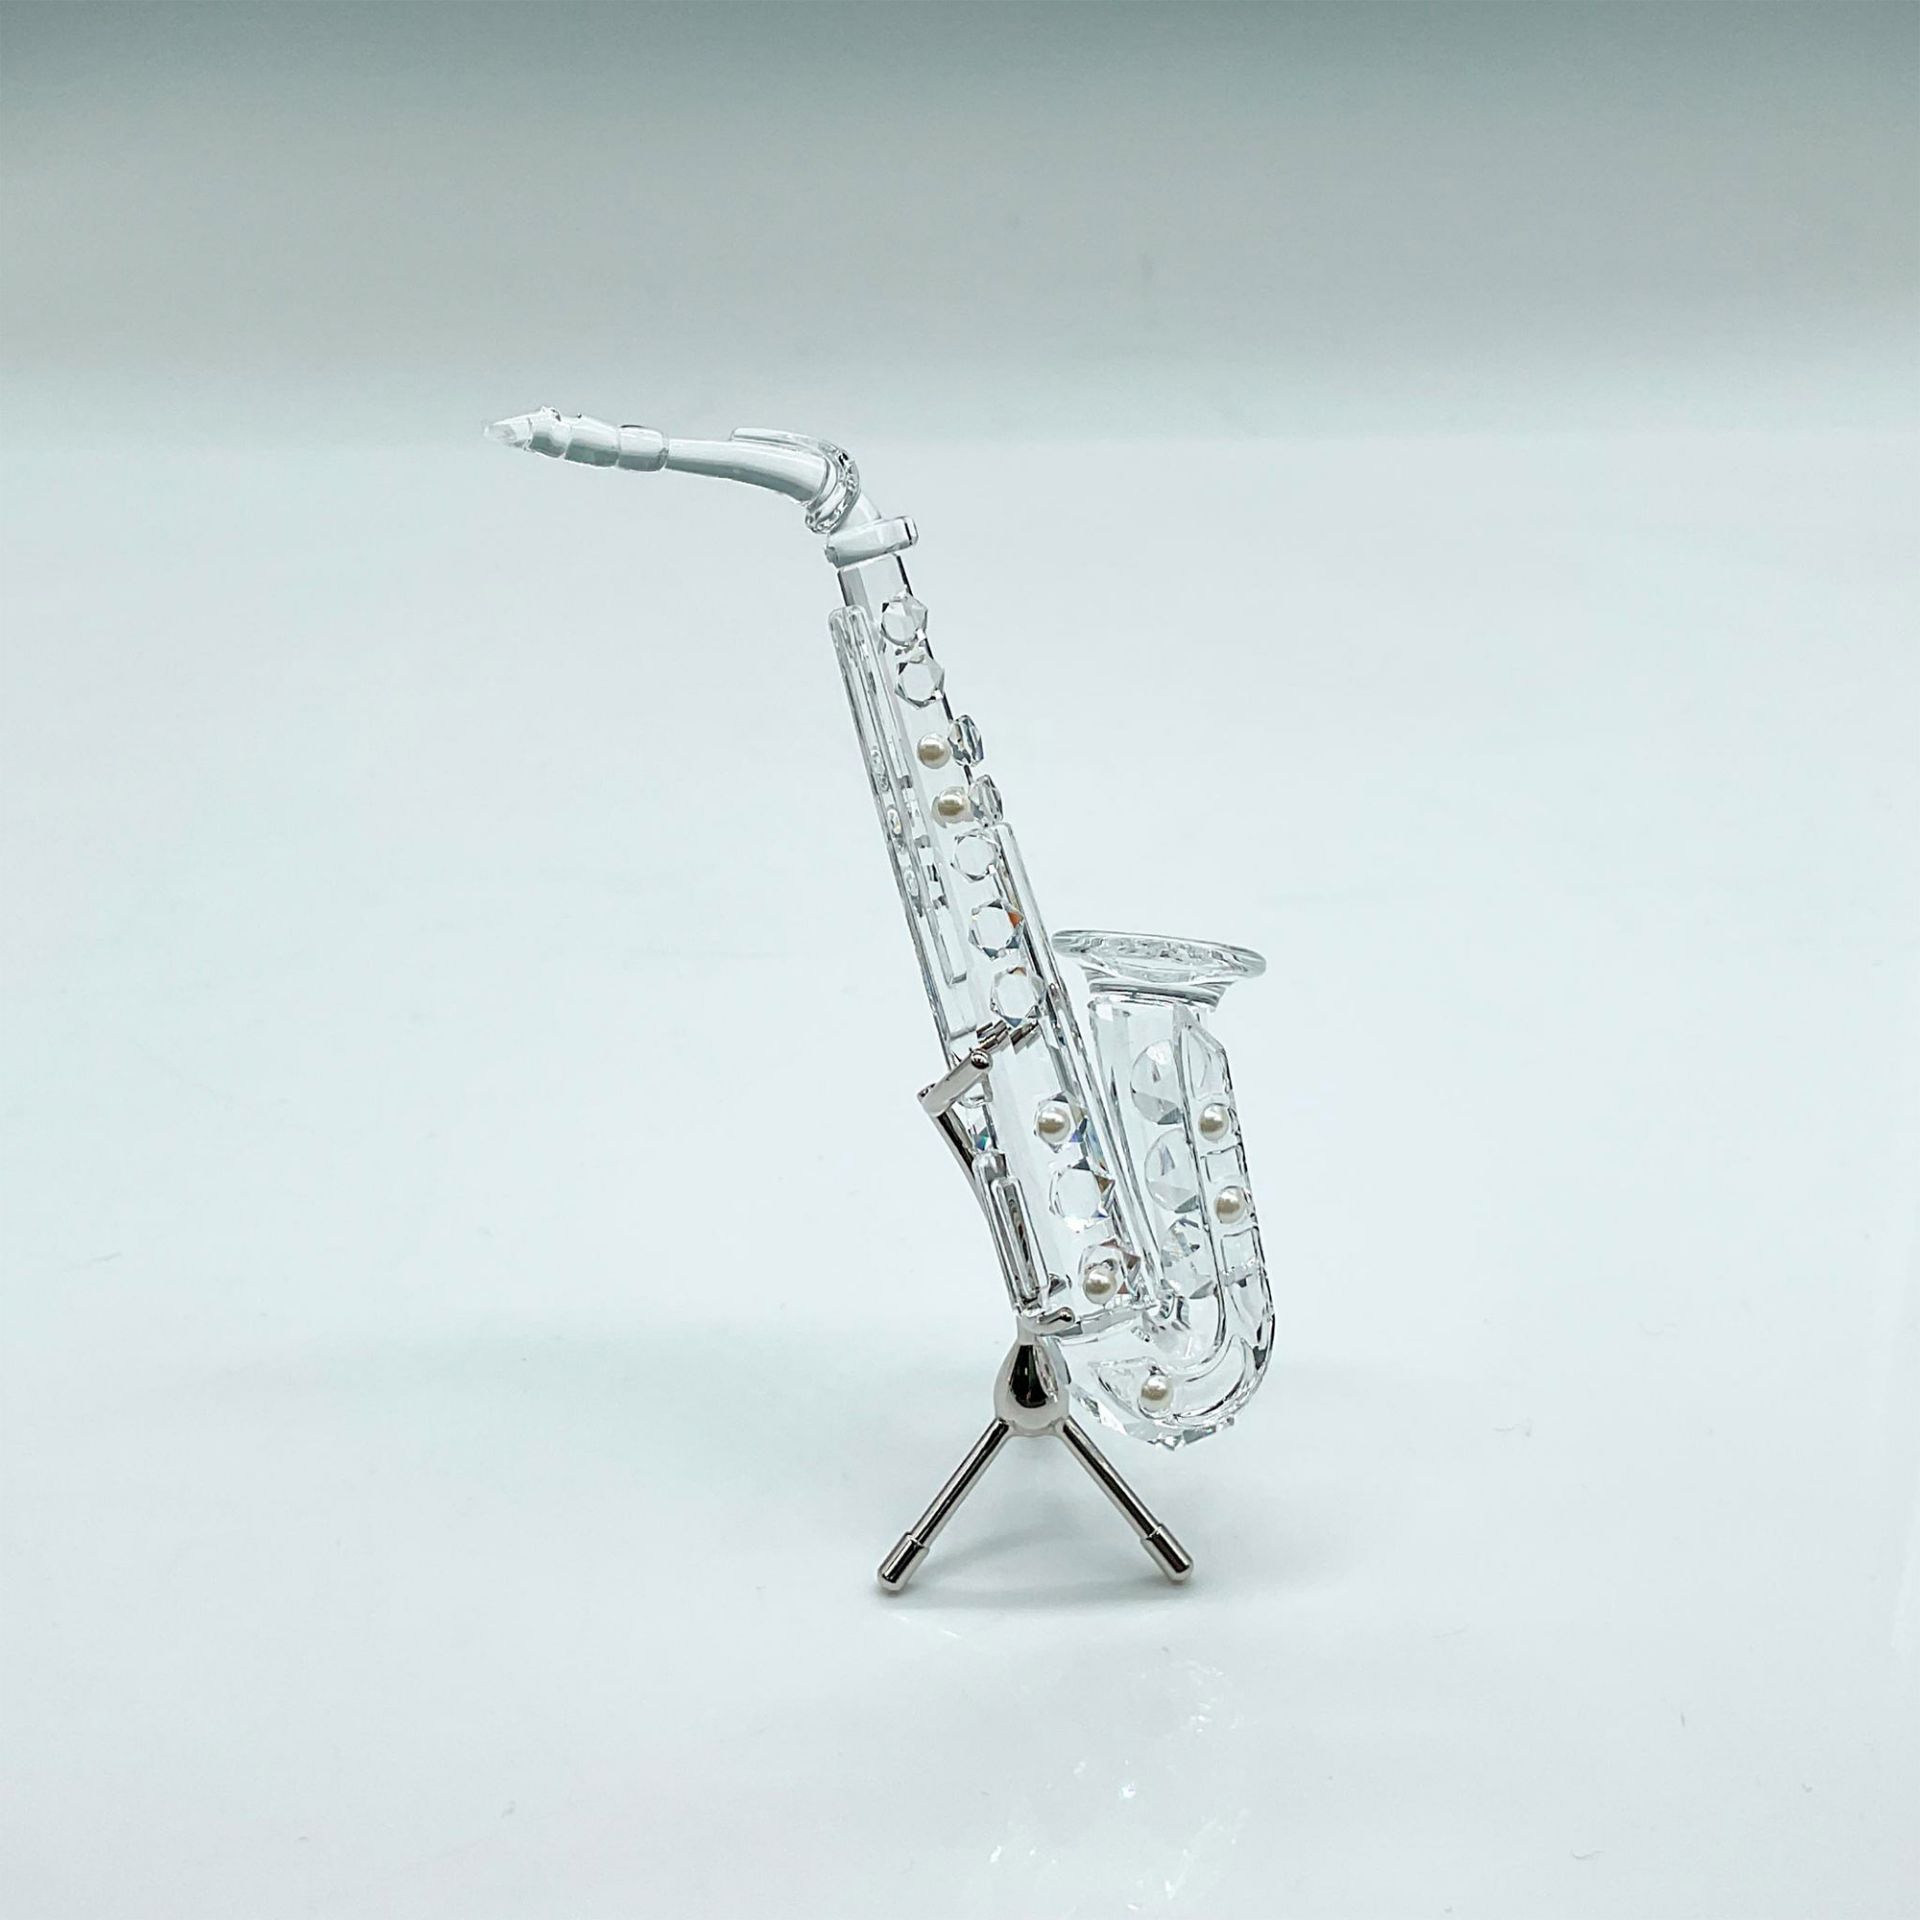 Swarovski Silver Crystal Figurine, Saxophone on Stand - Image 2 of 4